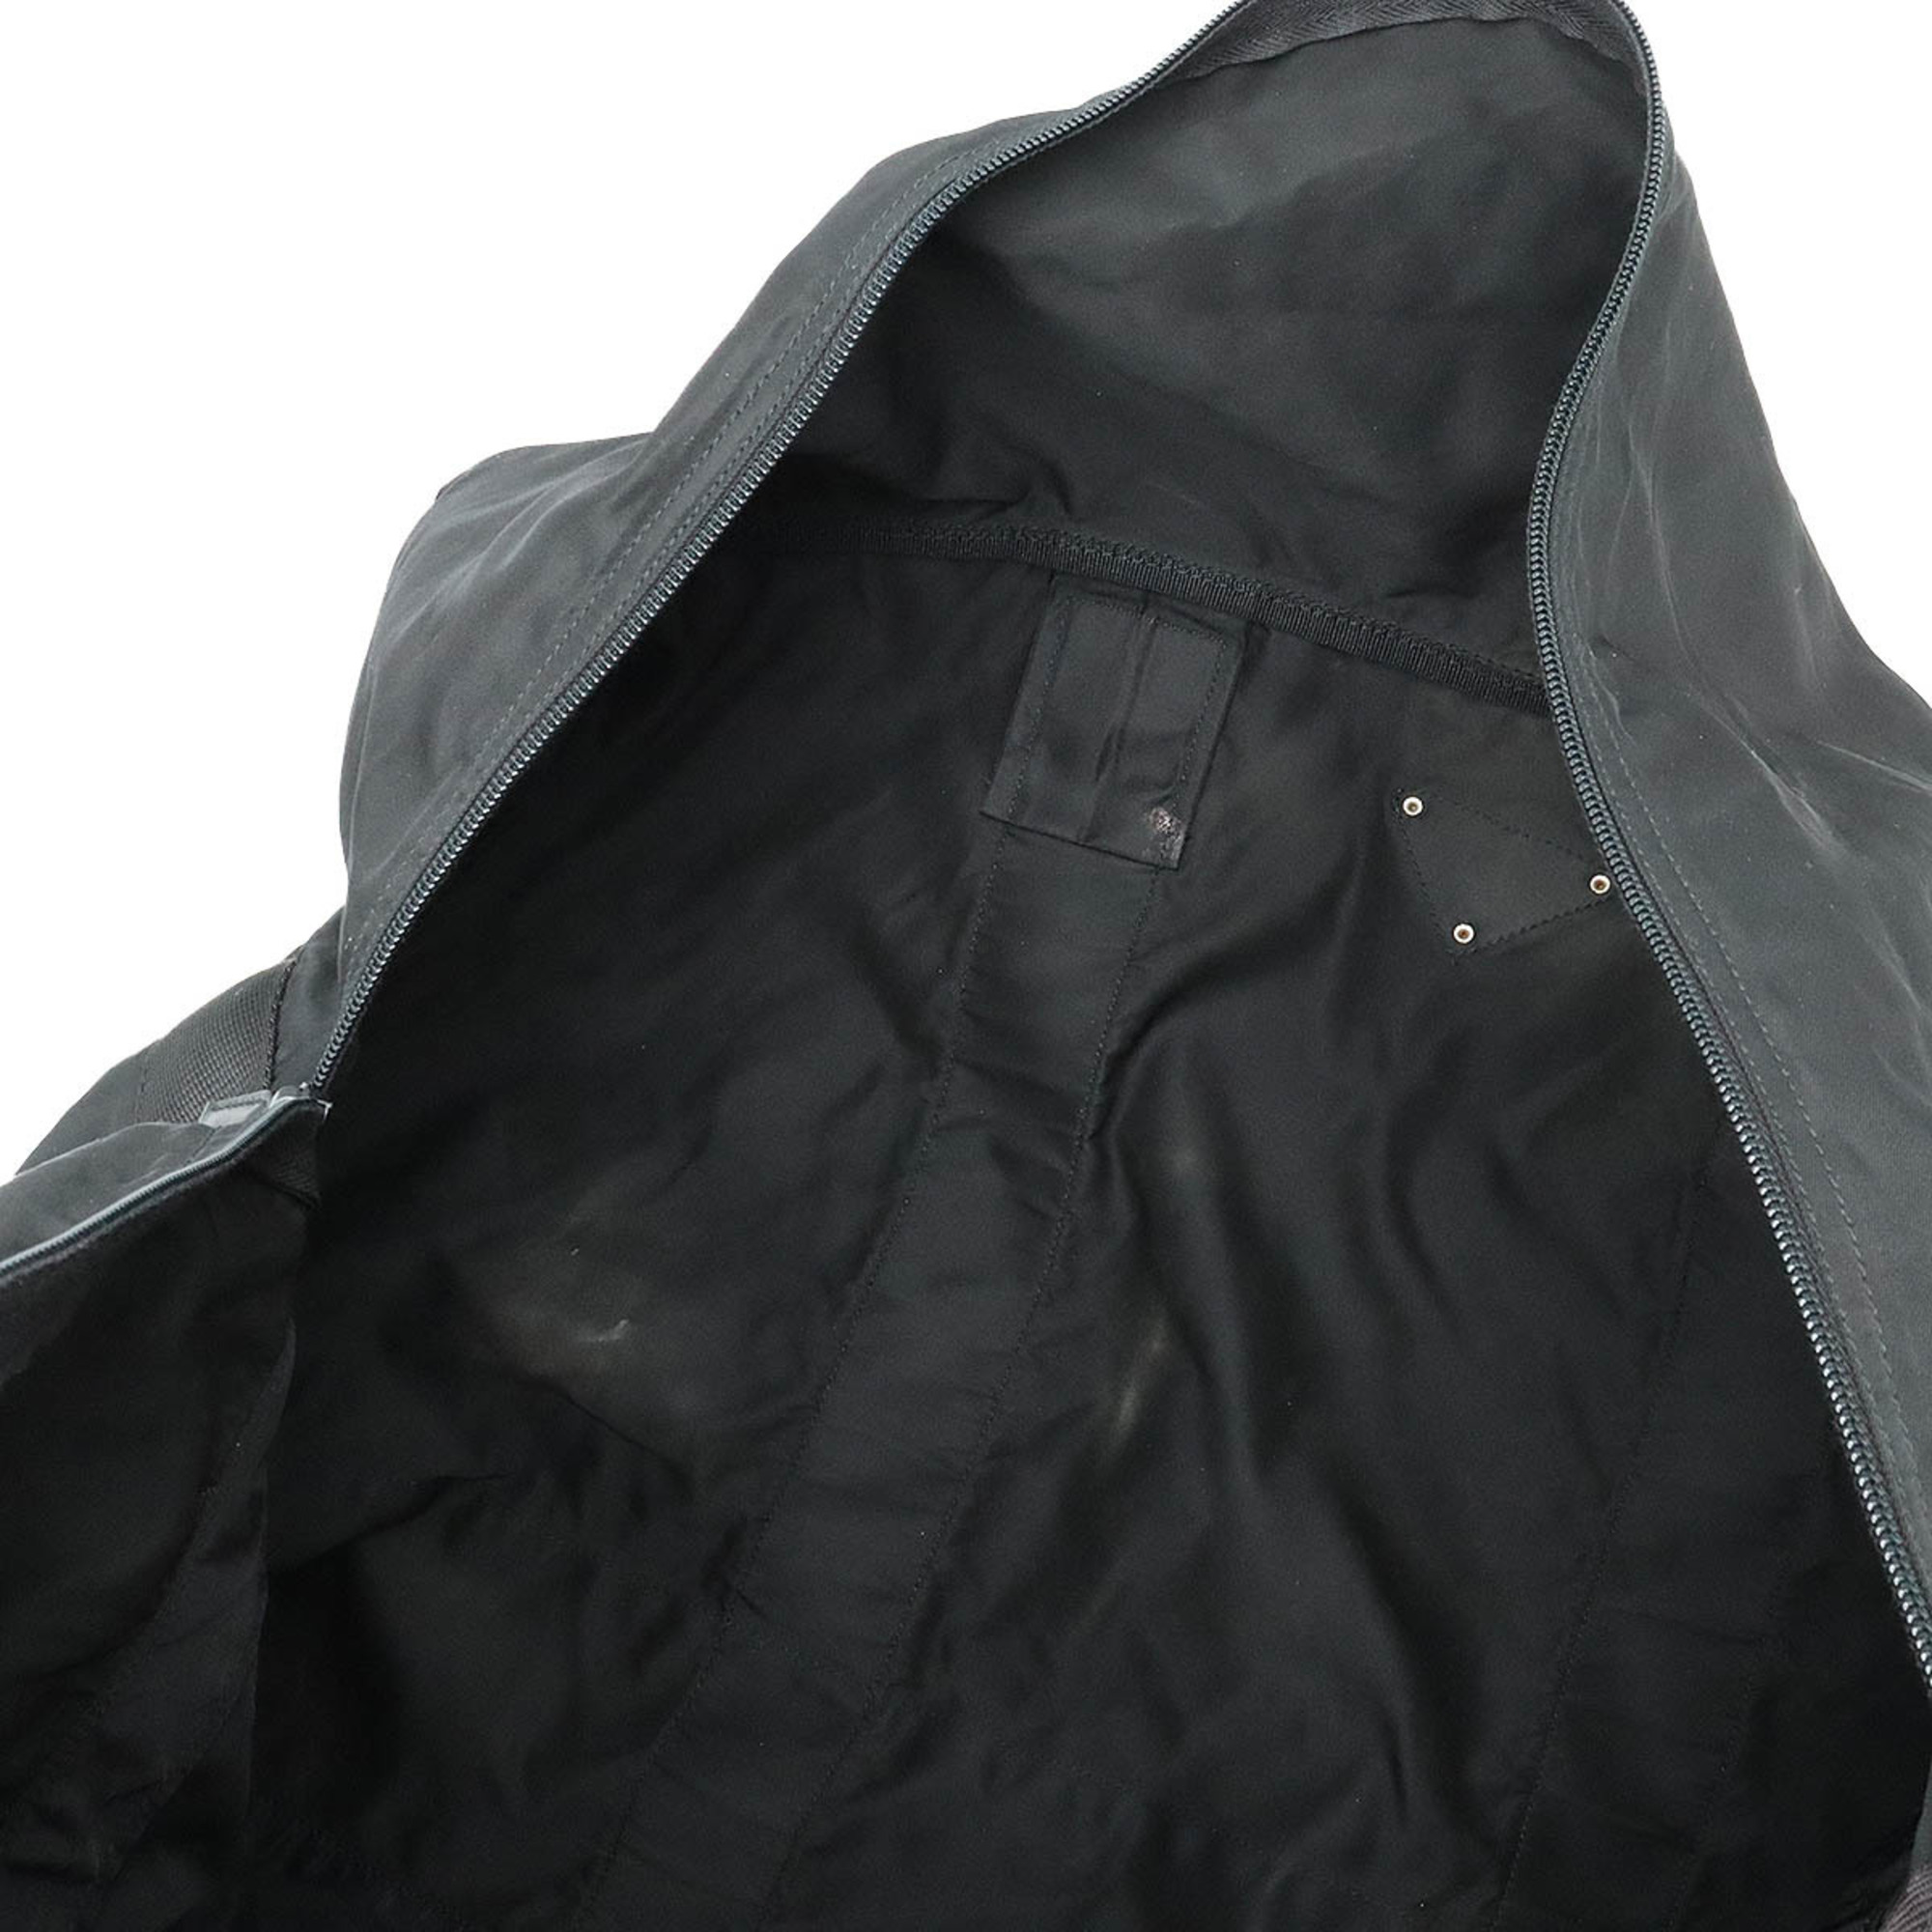 PRADA Prada Boston bag, travel nylon, leather, NERO, black